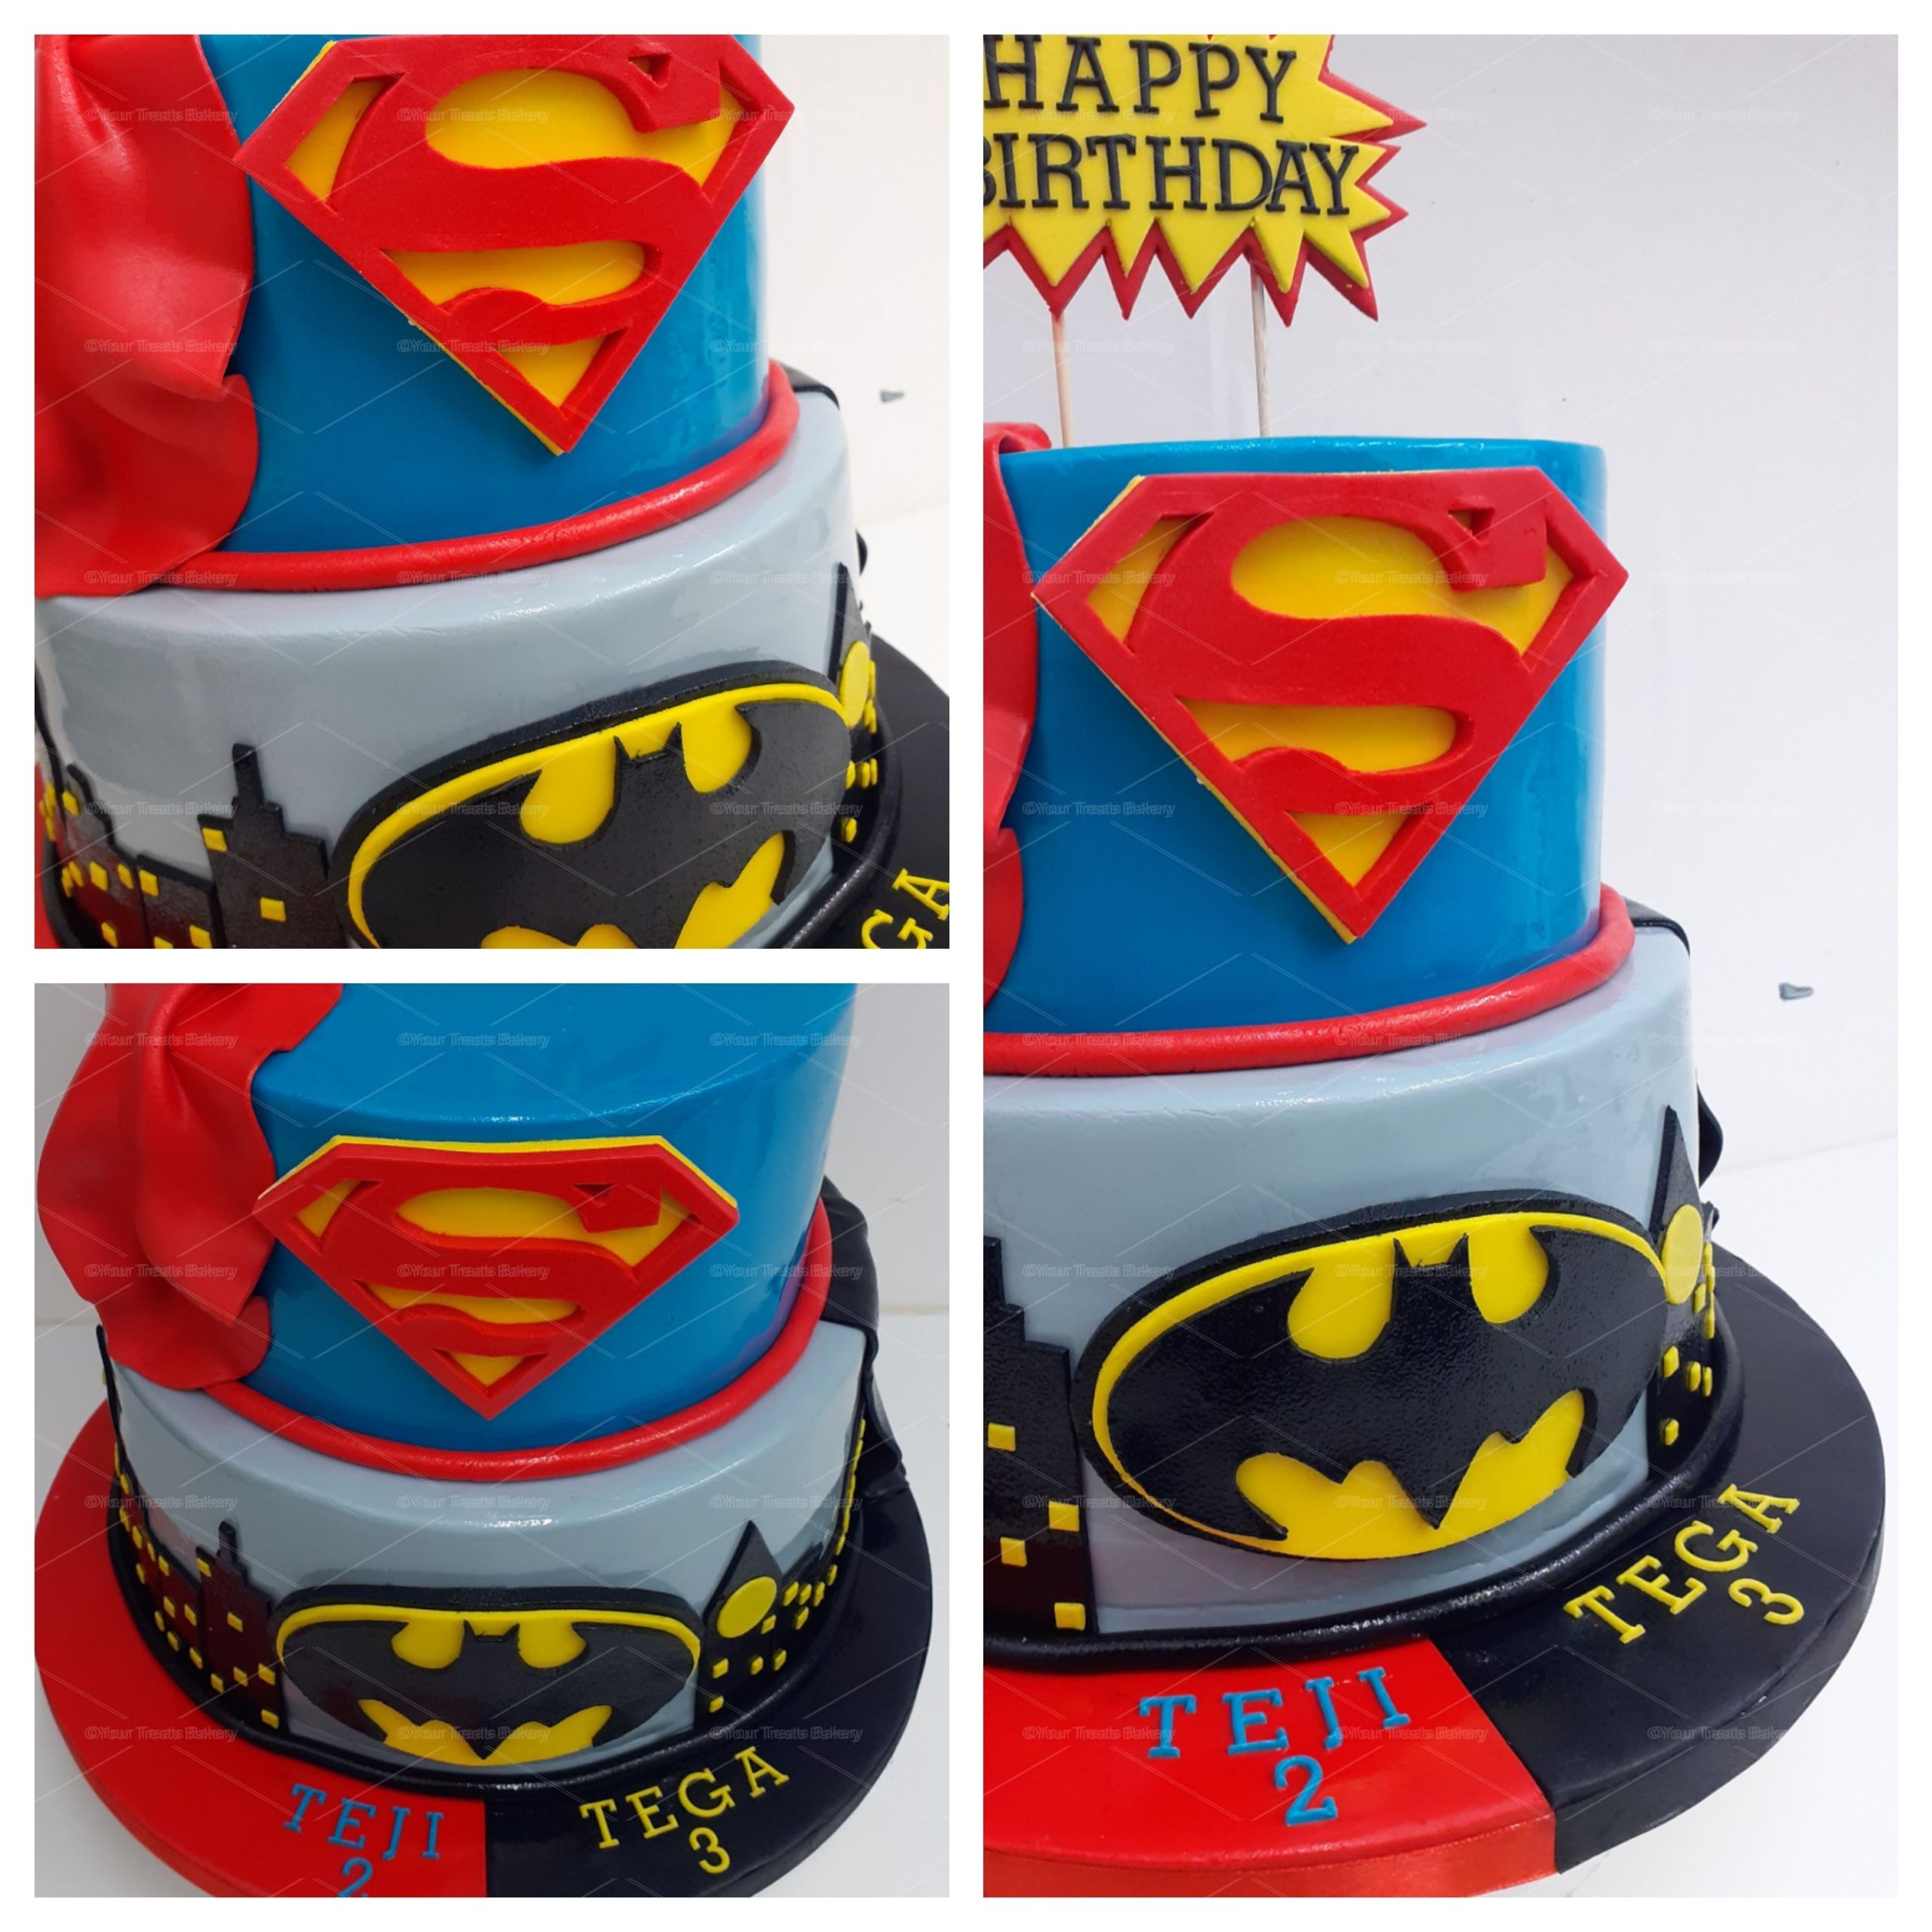 Superman cake. Cramello offers - عروض كراميللو